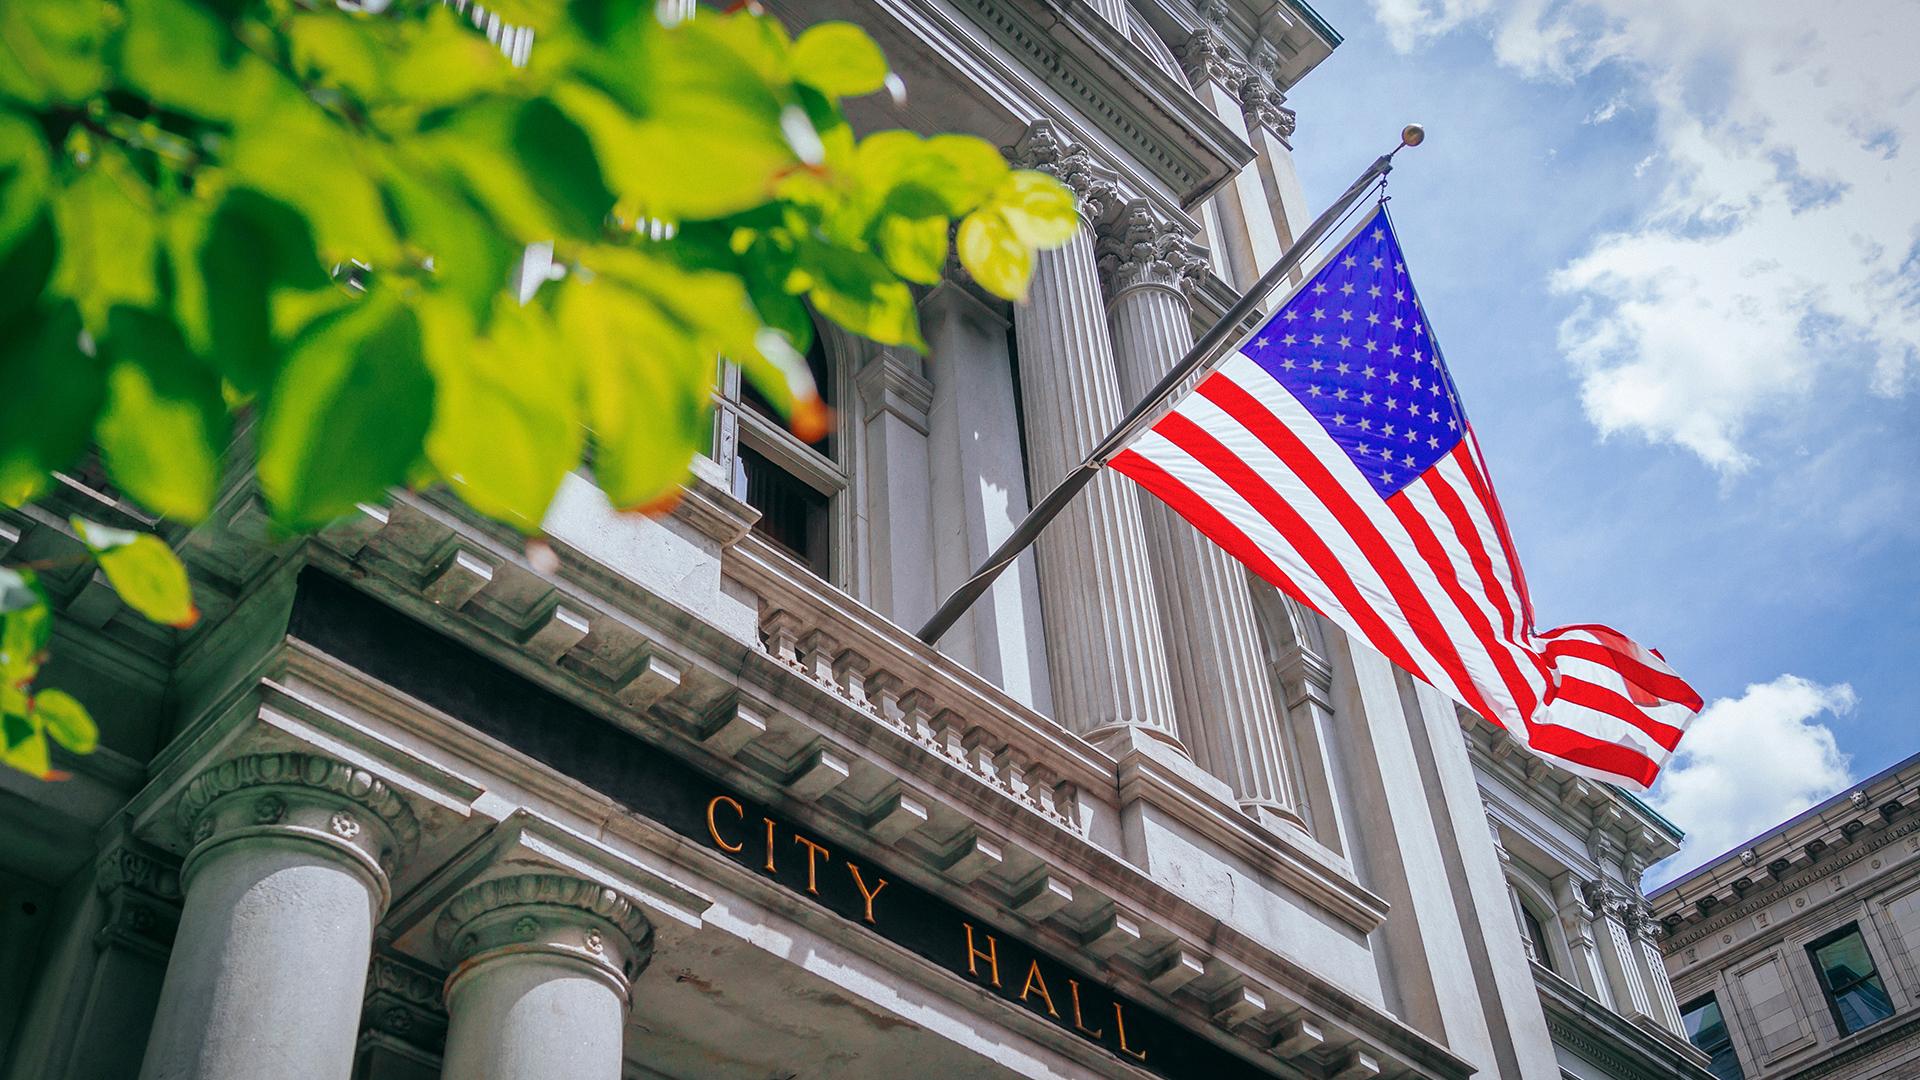 US Flag and the Old City Hall of Boston, USA